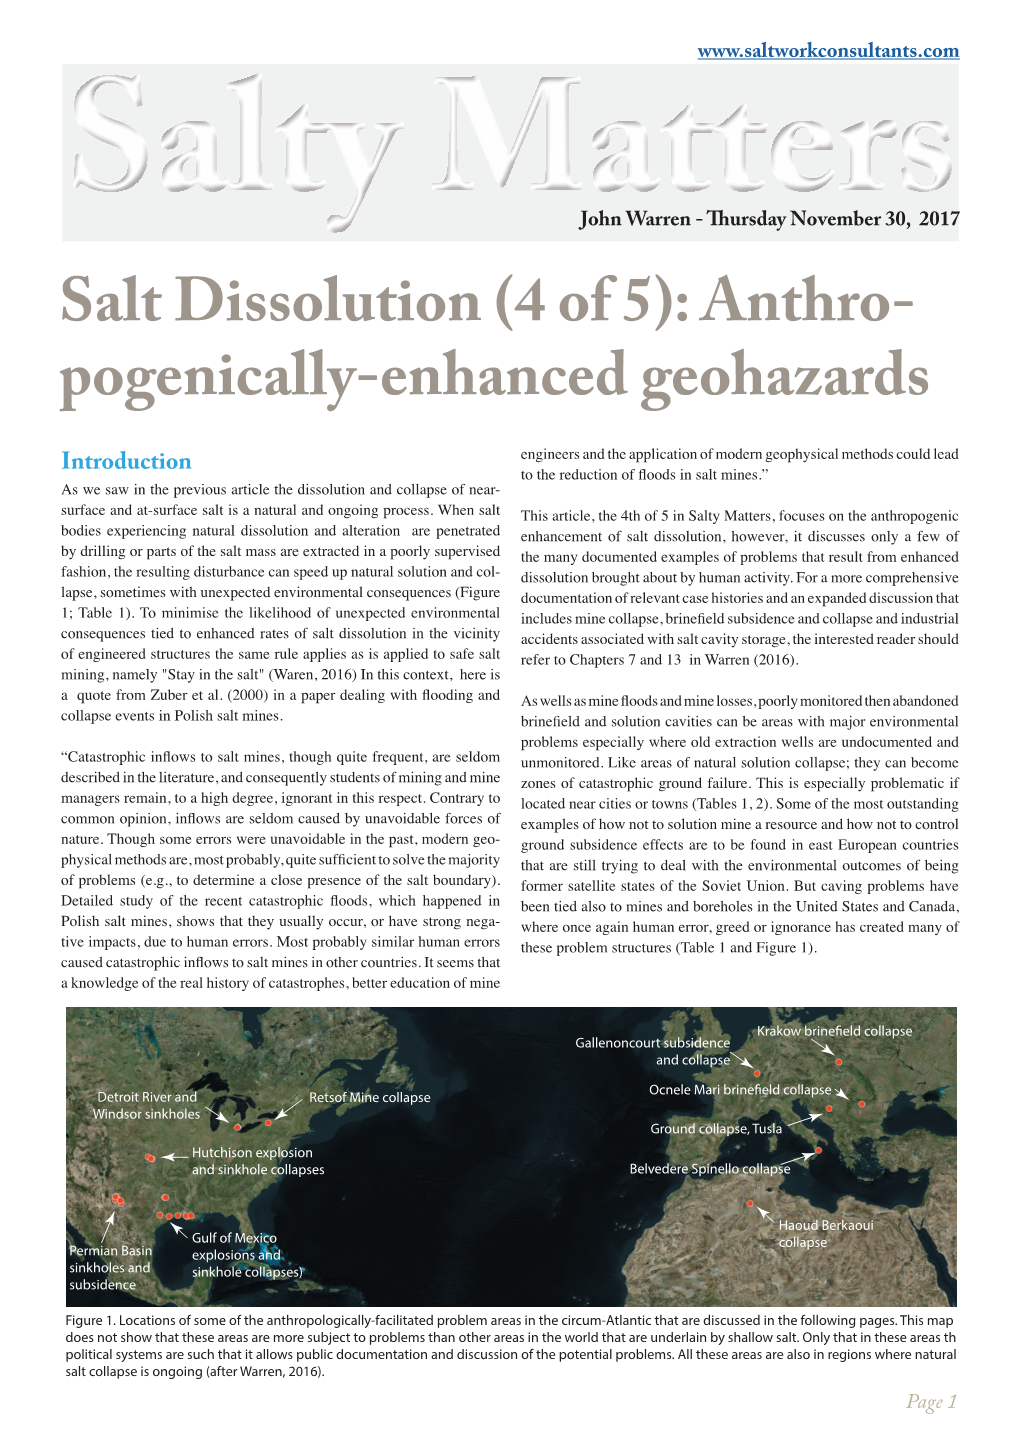 Salt Dissolution (4 of 5): Anthro- Pogenically-Enhanced Geohazards